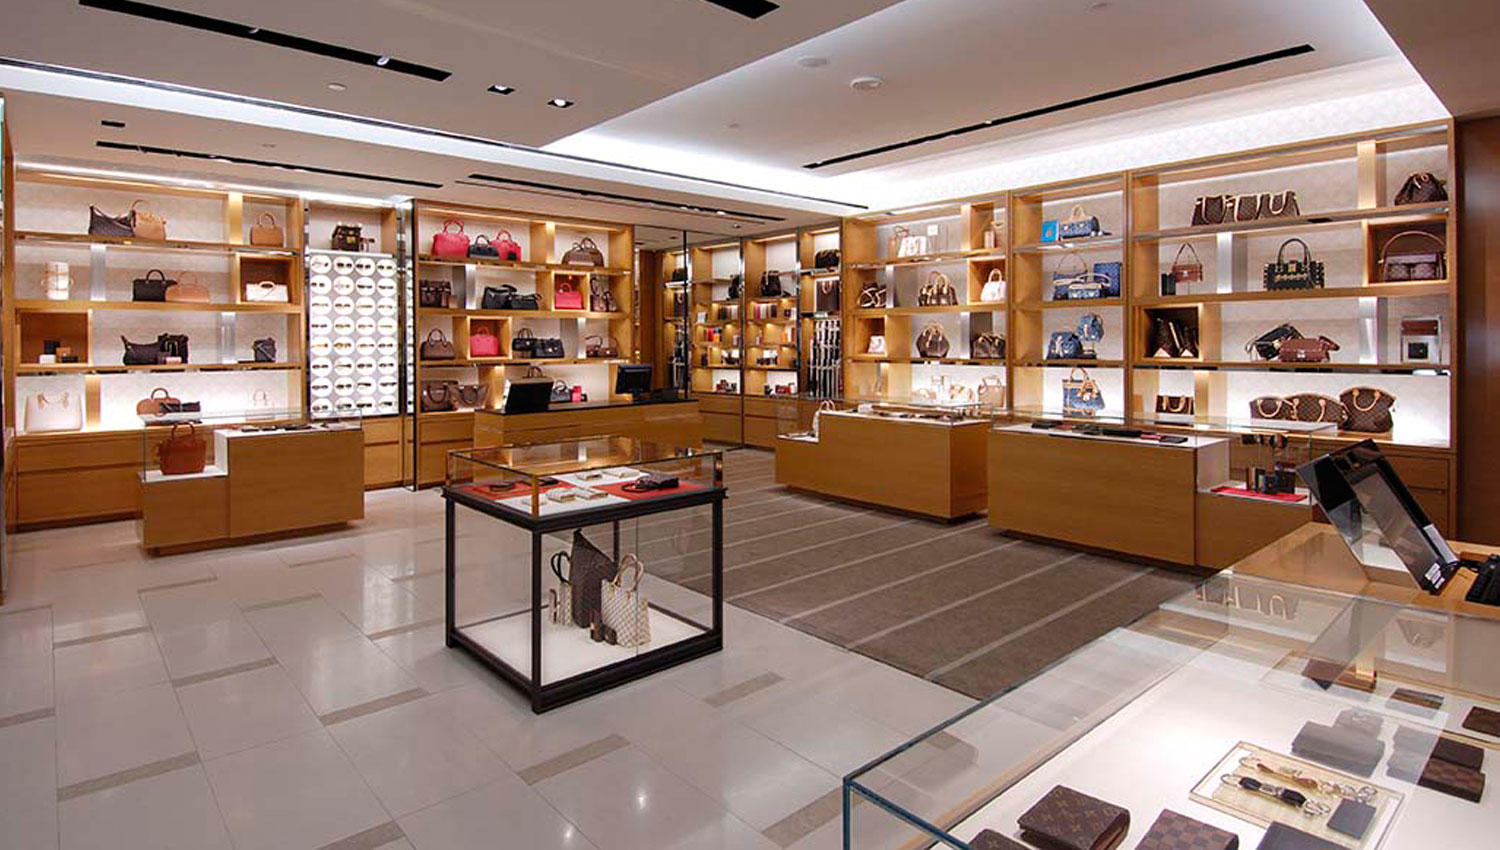 Retail  Louis Vuitton, Bloomingdales, NY